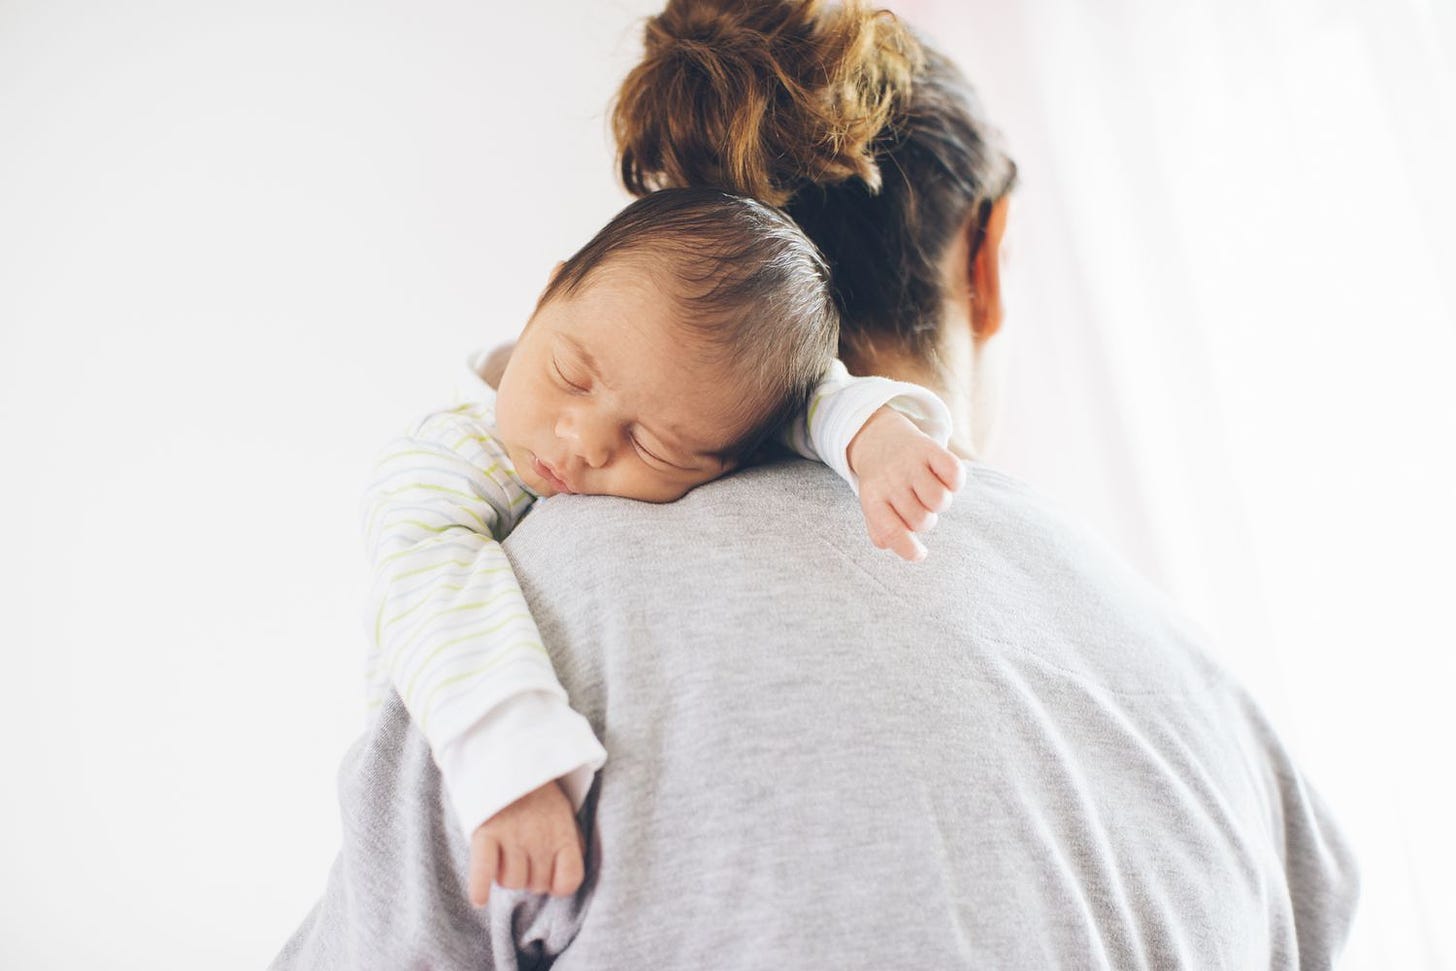 How to Keep Your Fragile Newborn Safe